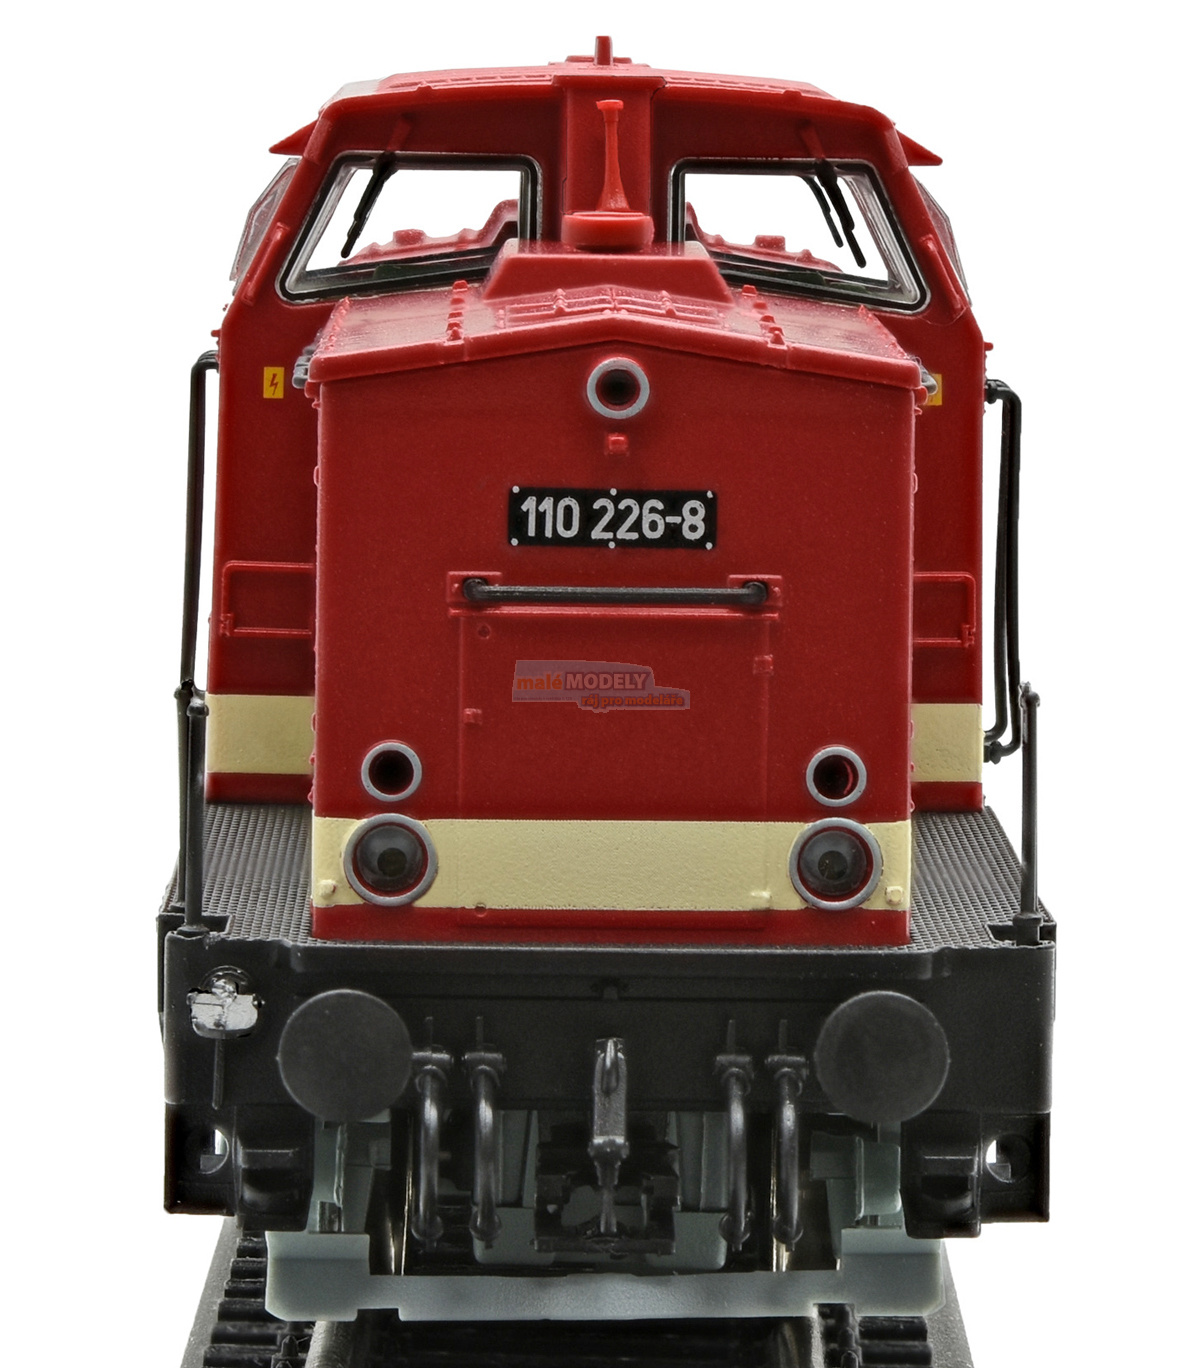 Dieselová lokomotiva BR 110 226